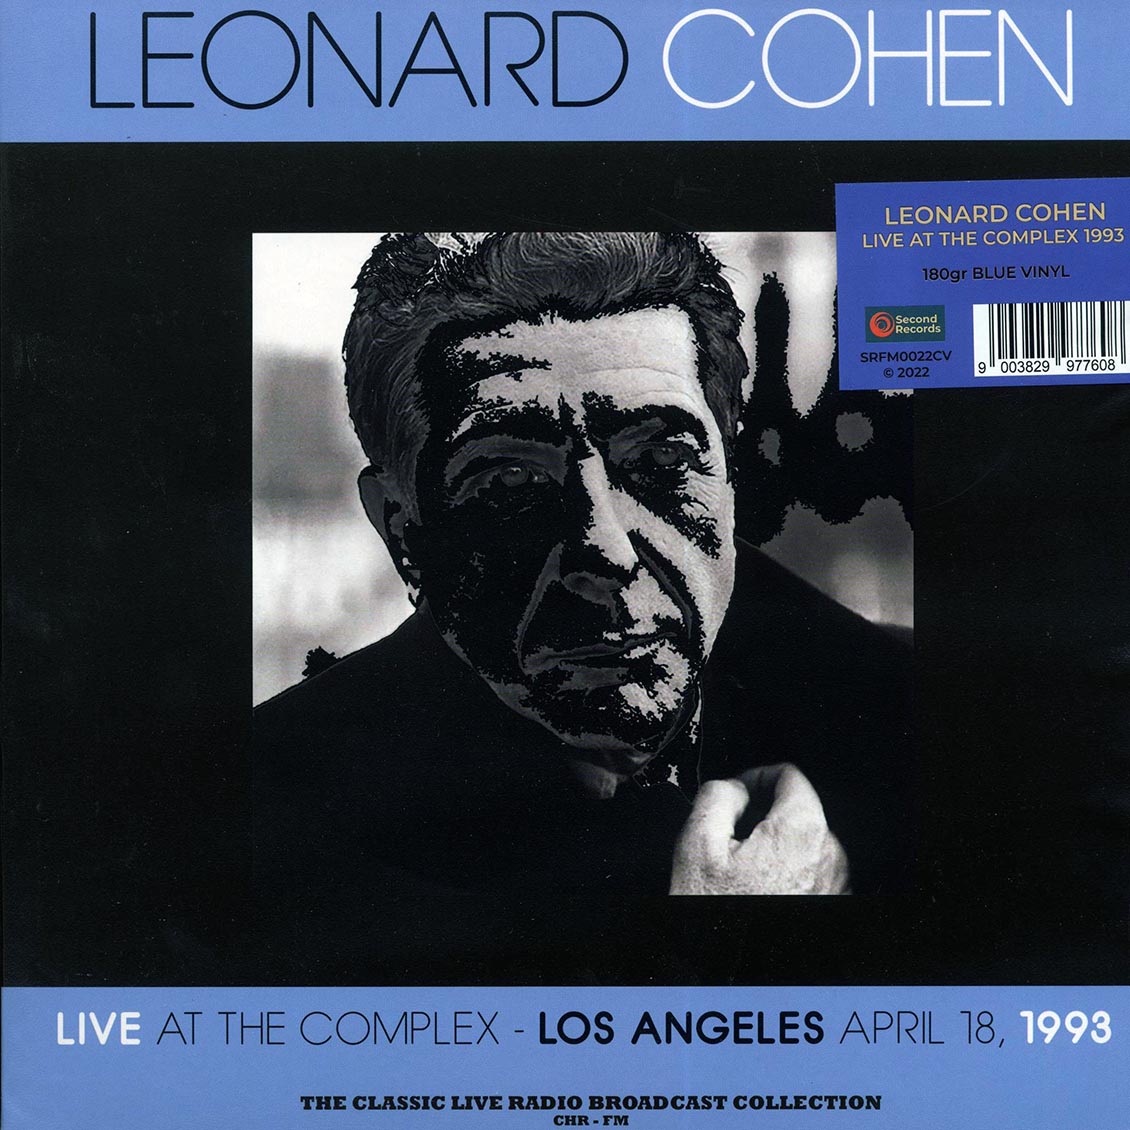 Leonard Cohen - Live At The Complex, Los Angeles, April 18, 1993 (180g) (blue vinyl) - Vinyl LP